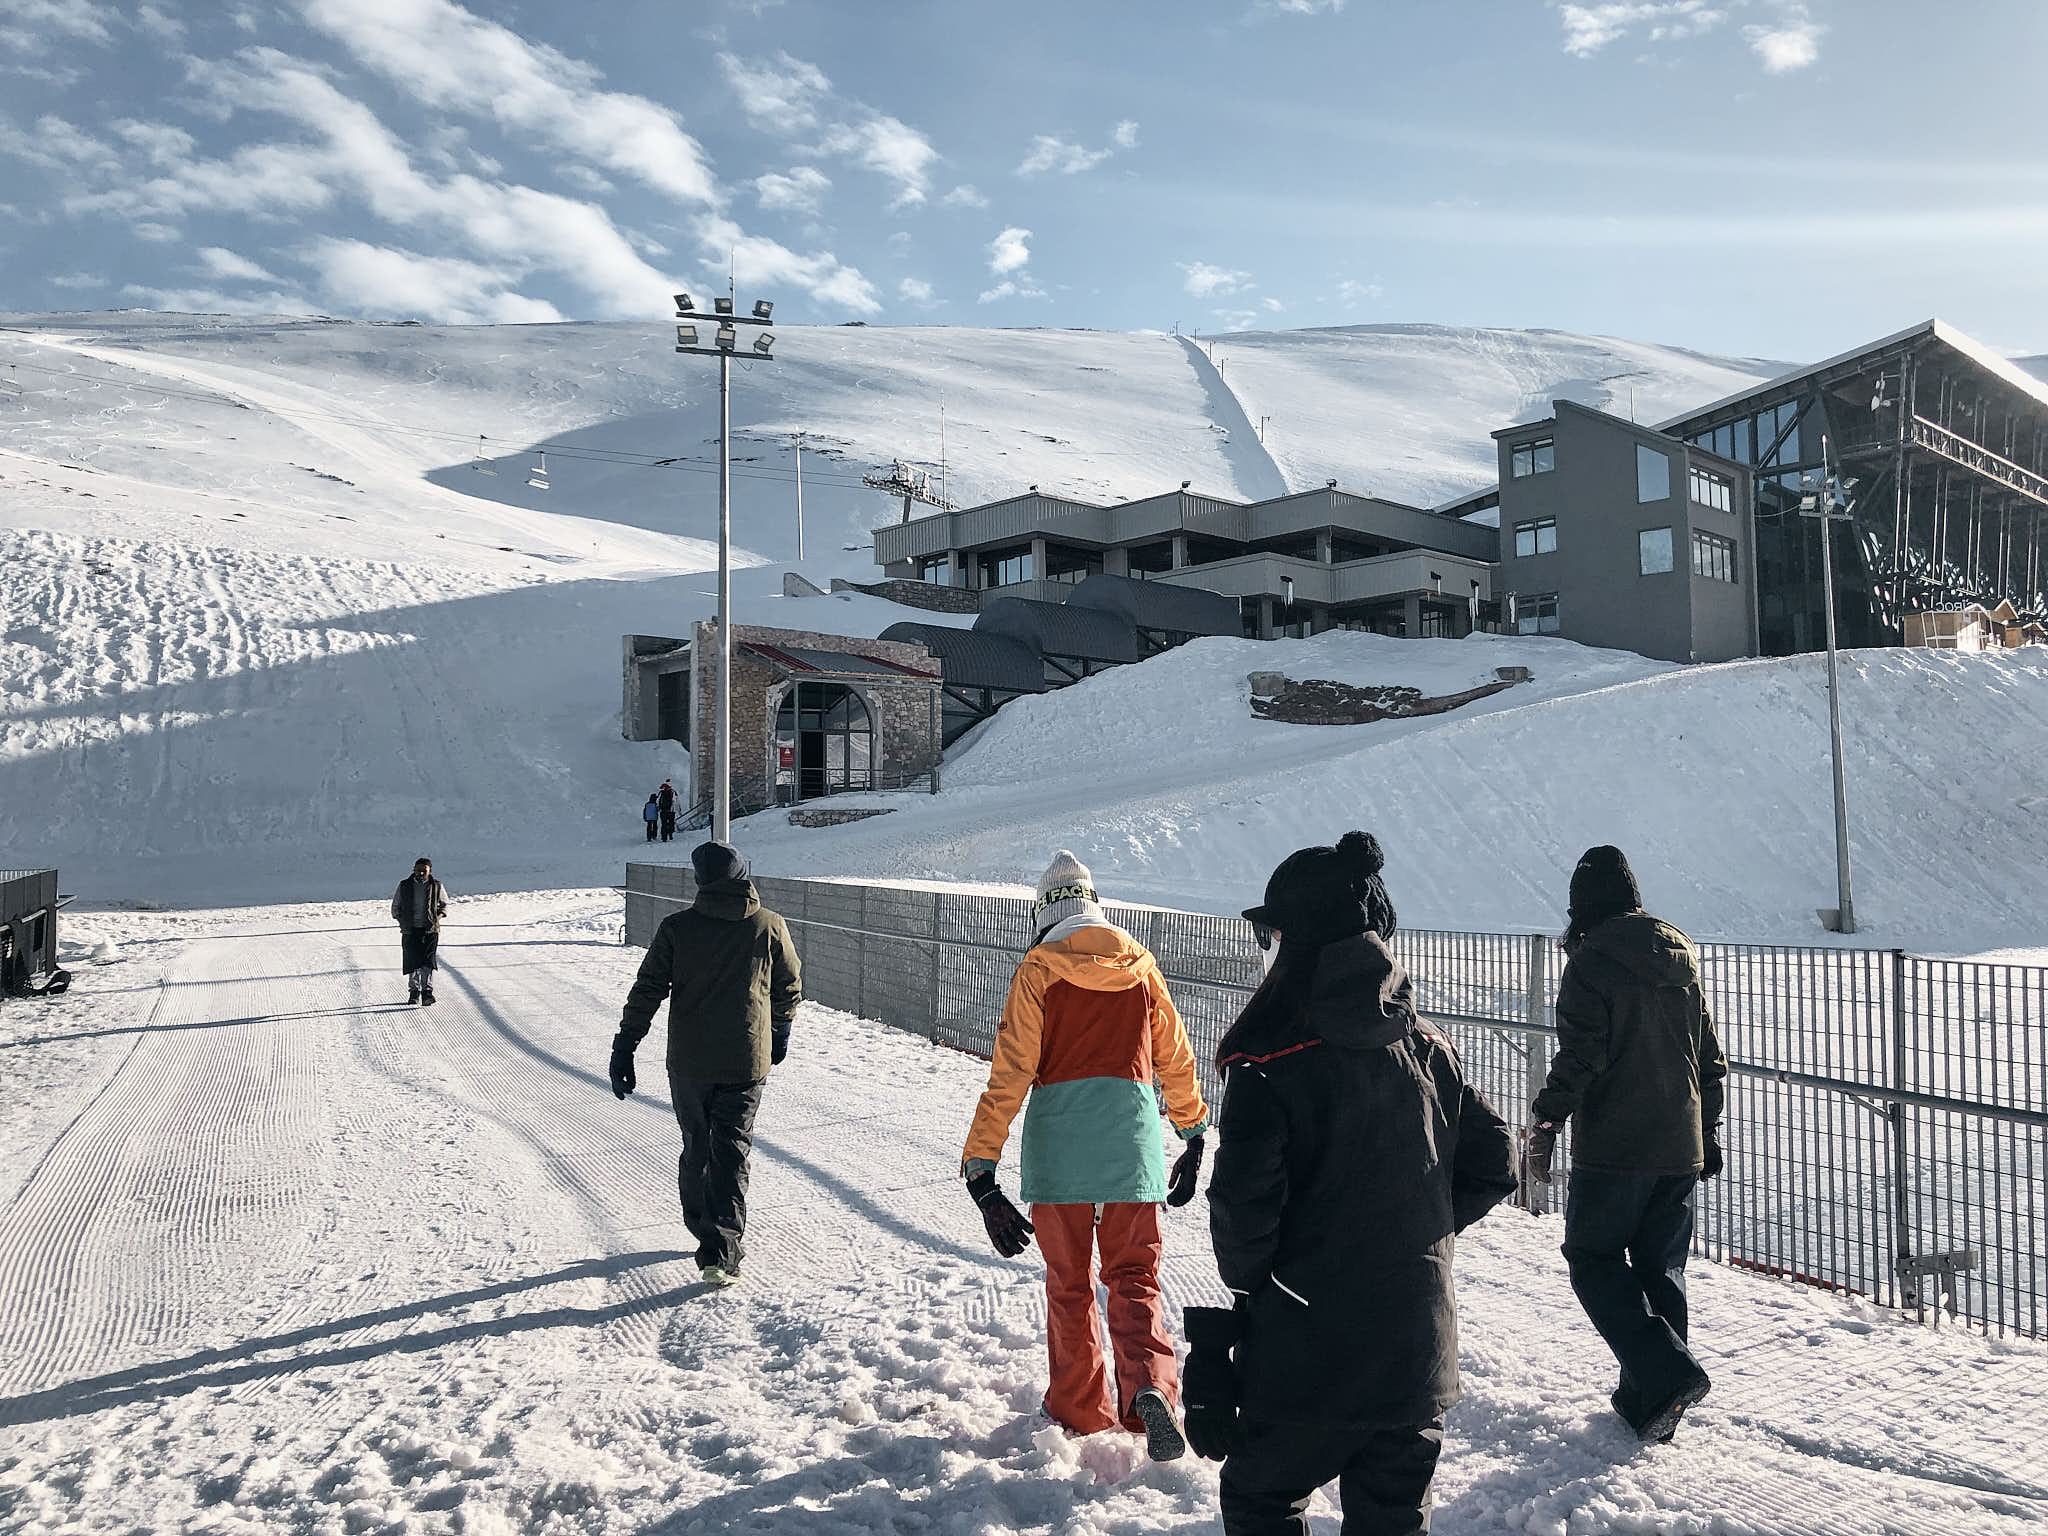 Article117 greece mount parnassos ski centre resort 希臘 帕納索斯 雪場 7880